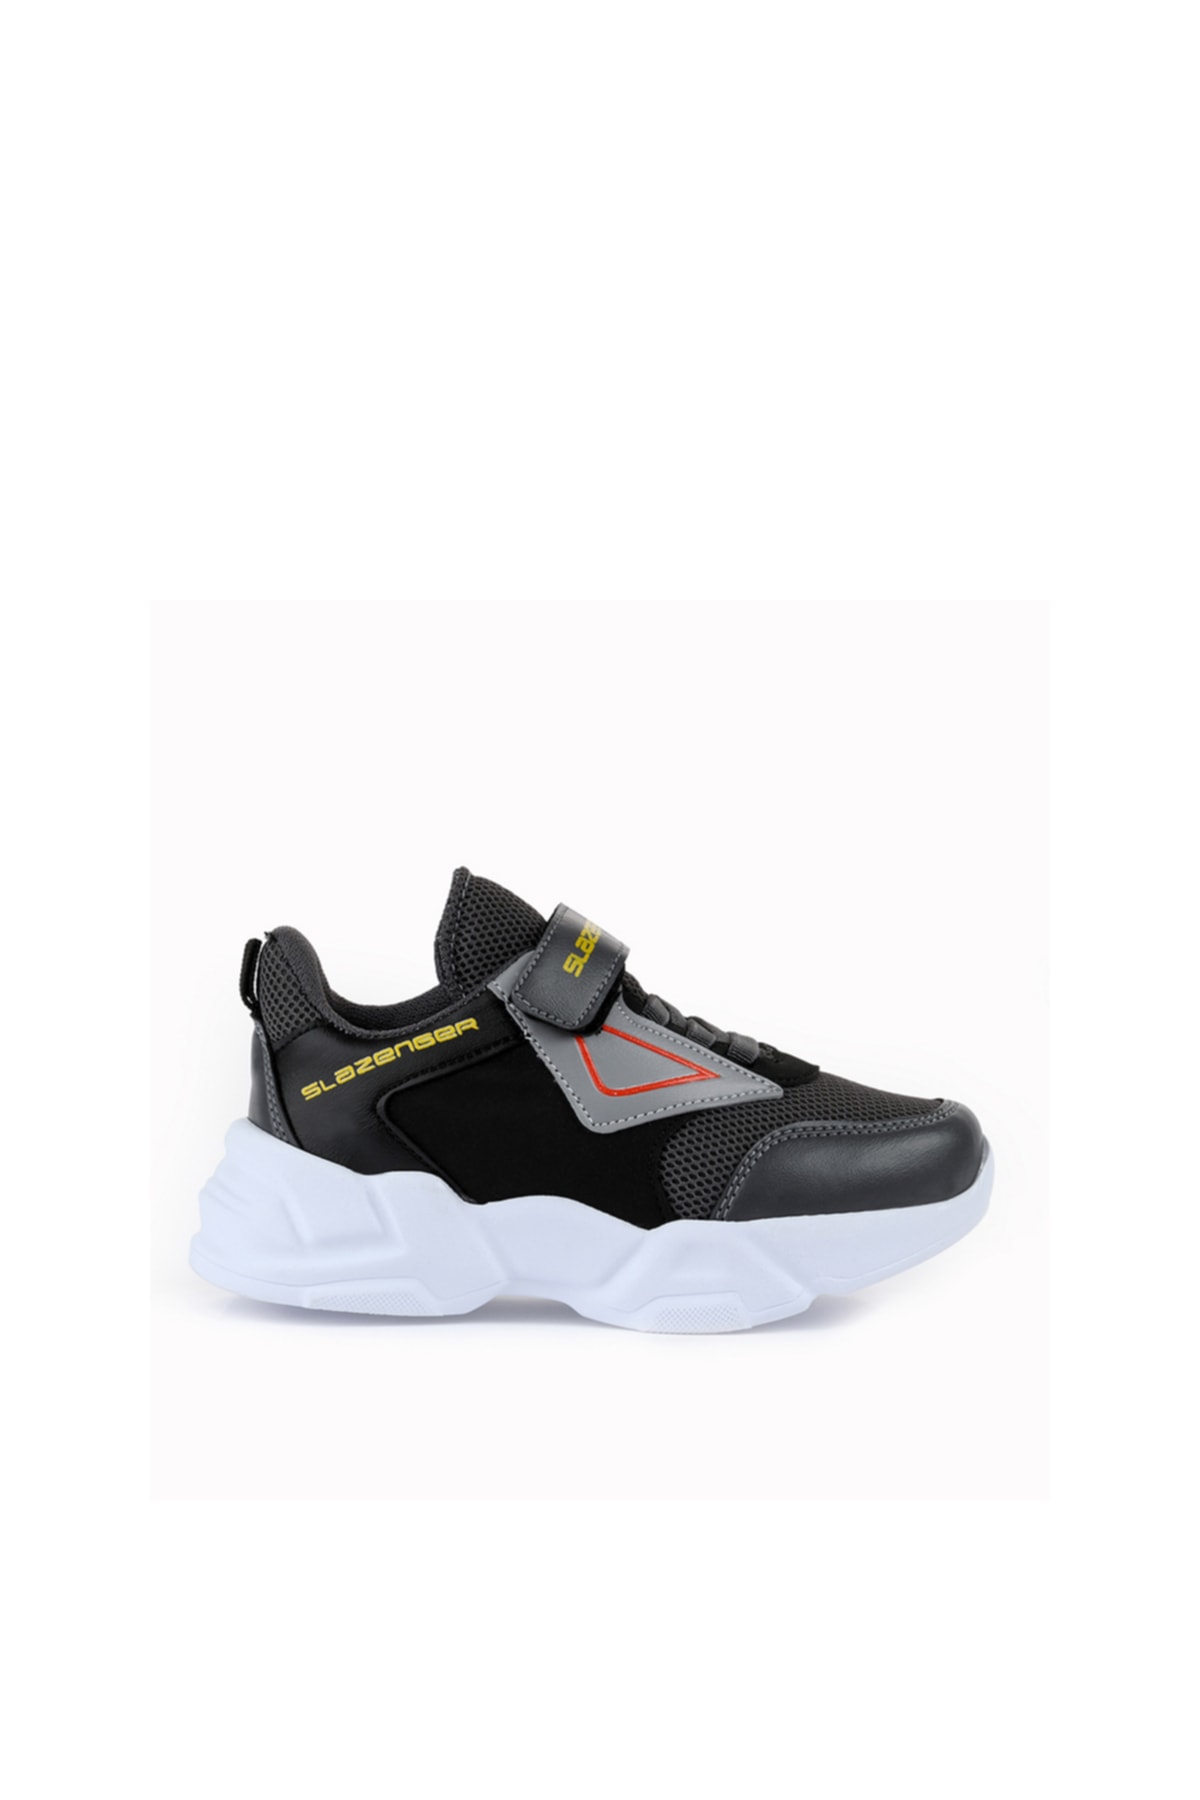 Slazenger Kevan I Sneaker Boys' Shoes Grey / Black